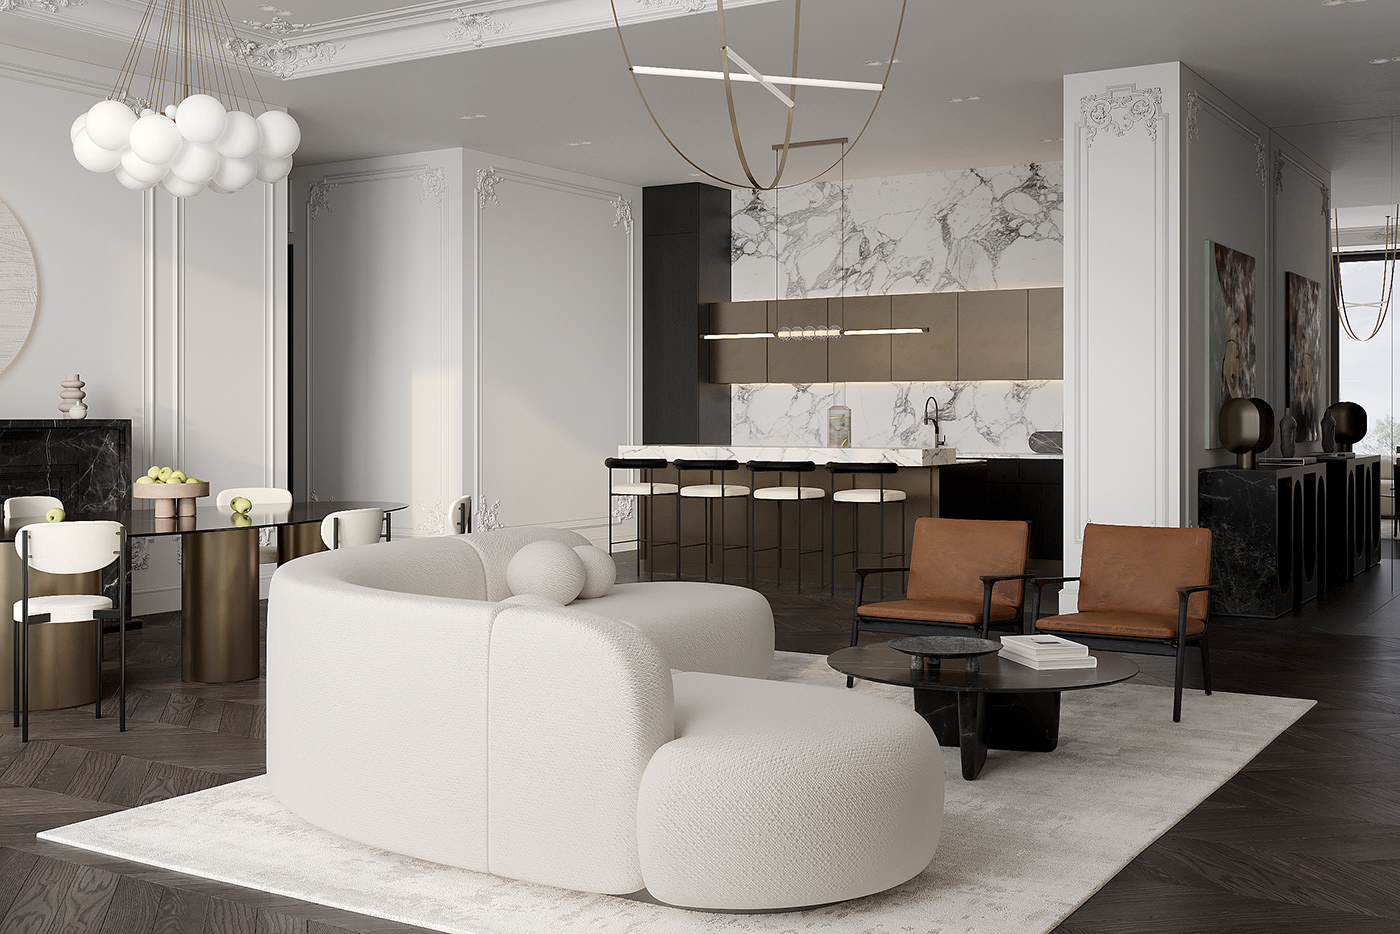 3ds max corona render  design Interior interior design  kitchen living room Render visualization